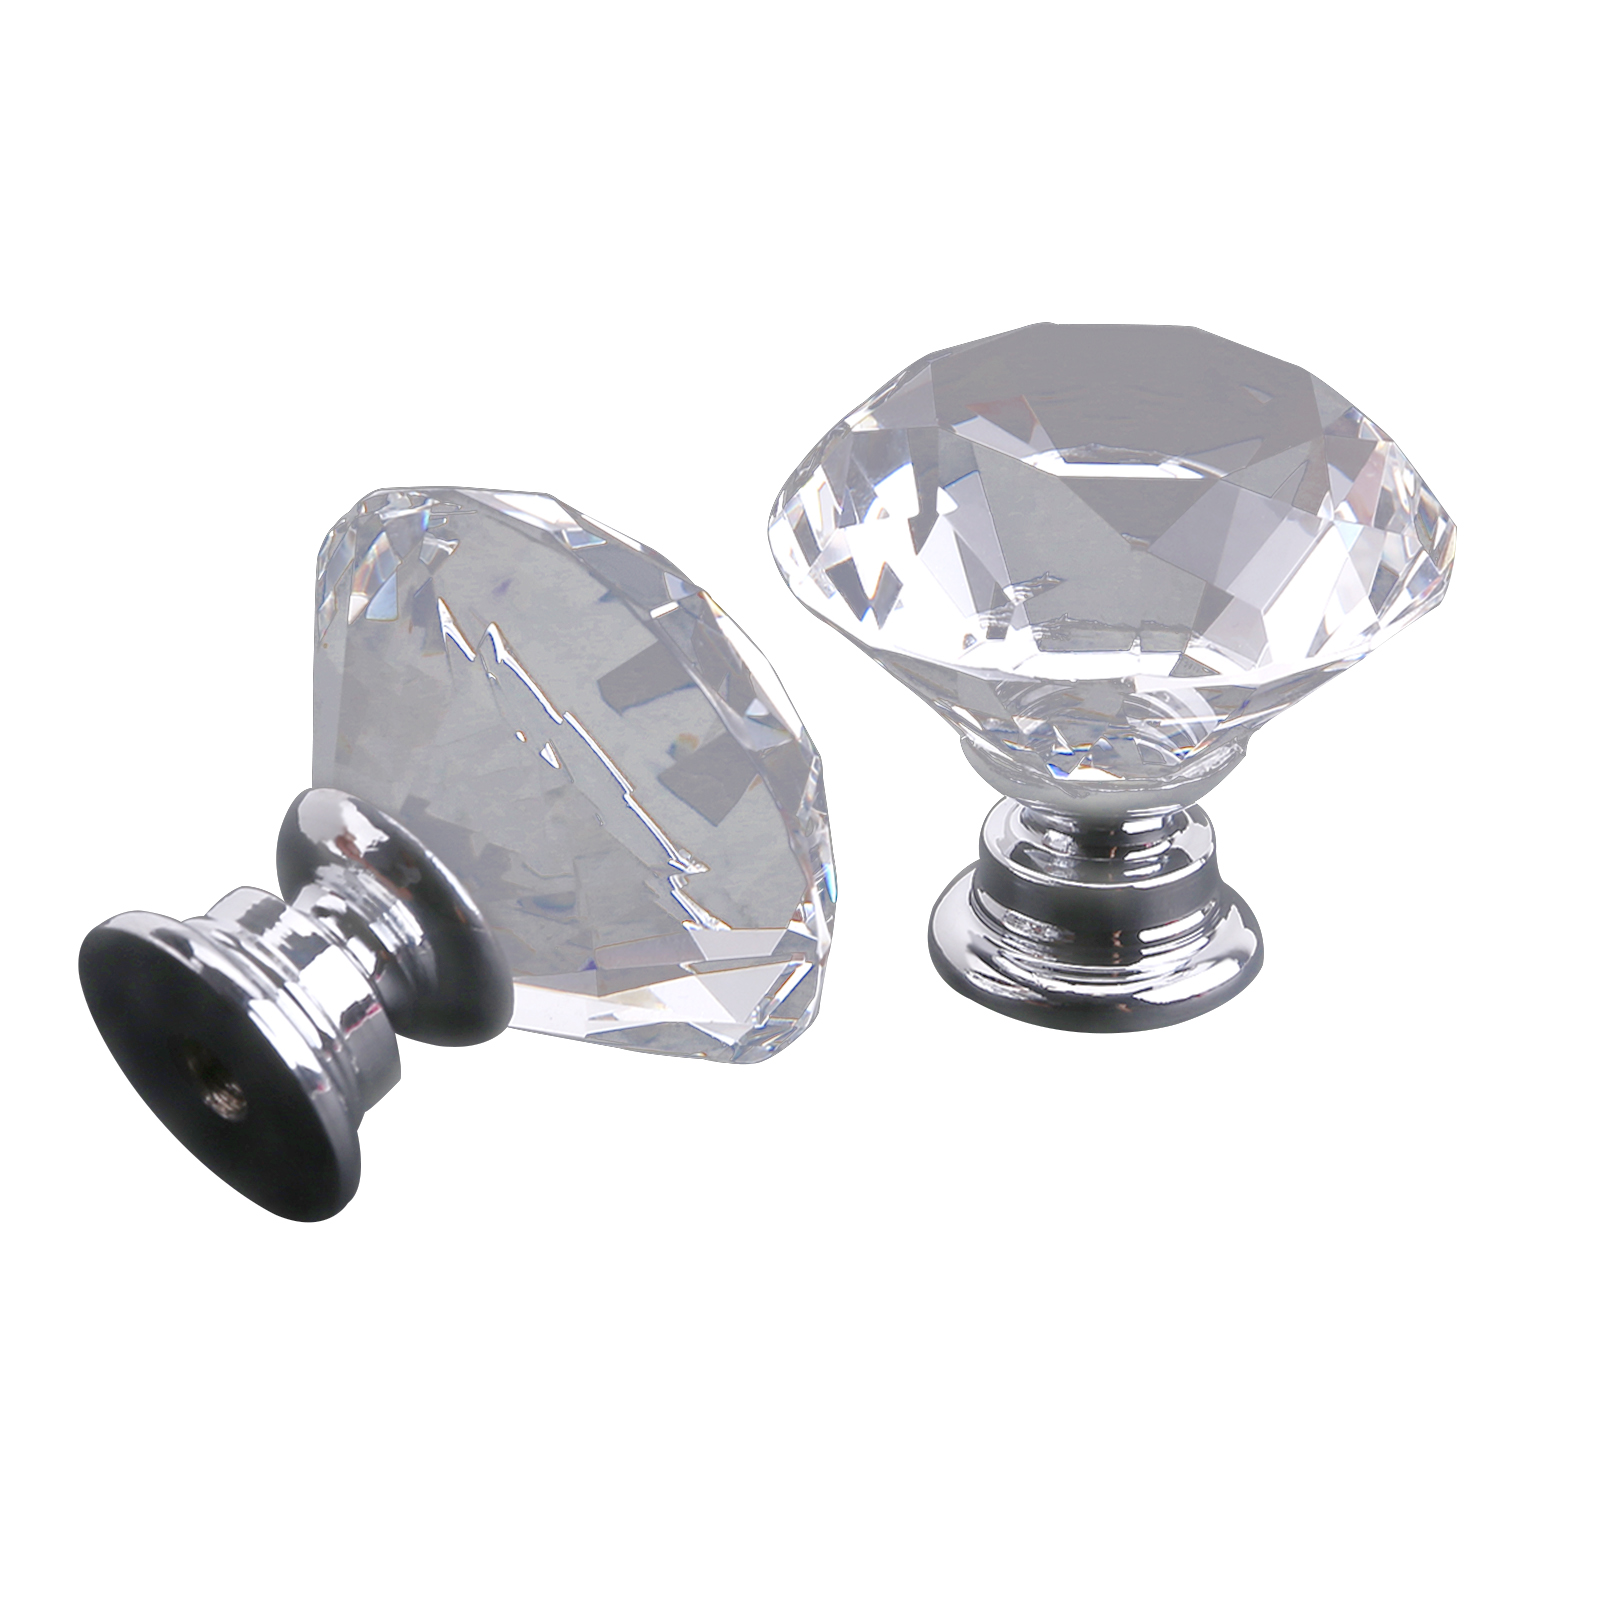 Large crystal knobs